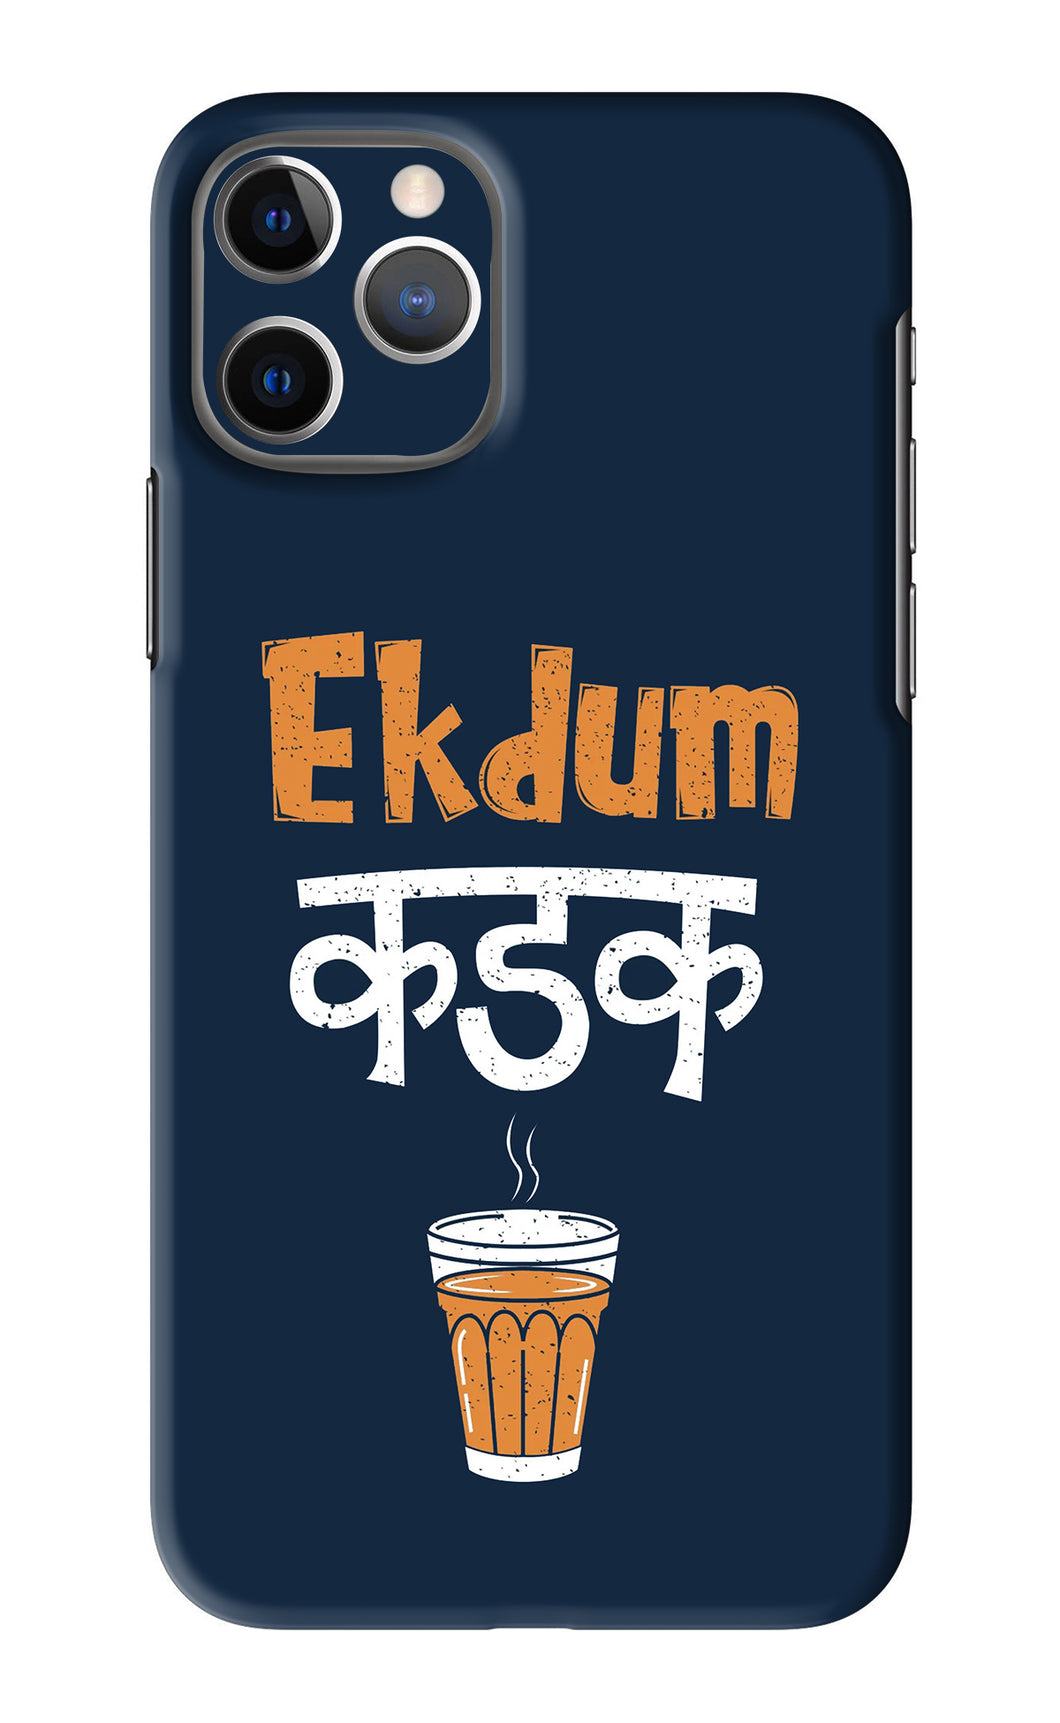 Ekdum Kadak Chai iPhone 11 Pro Back Skin Wrap